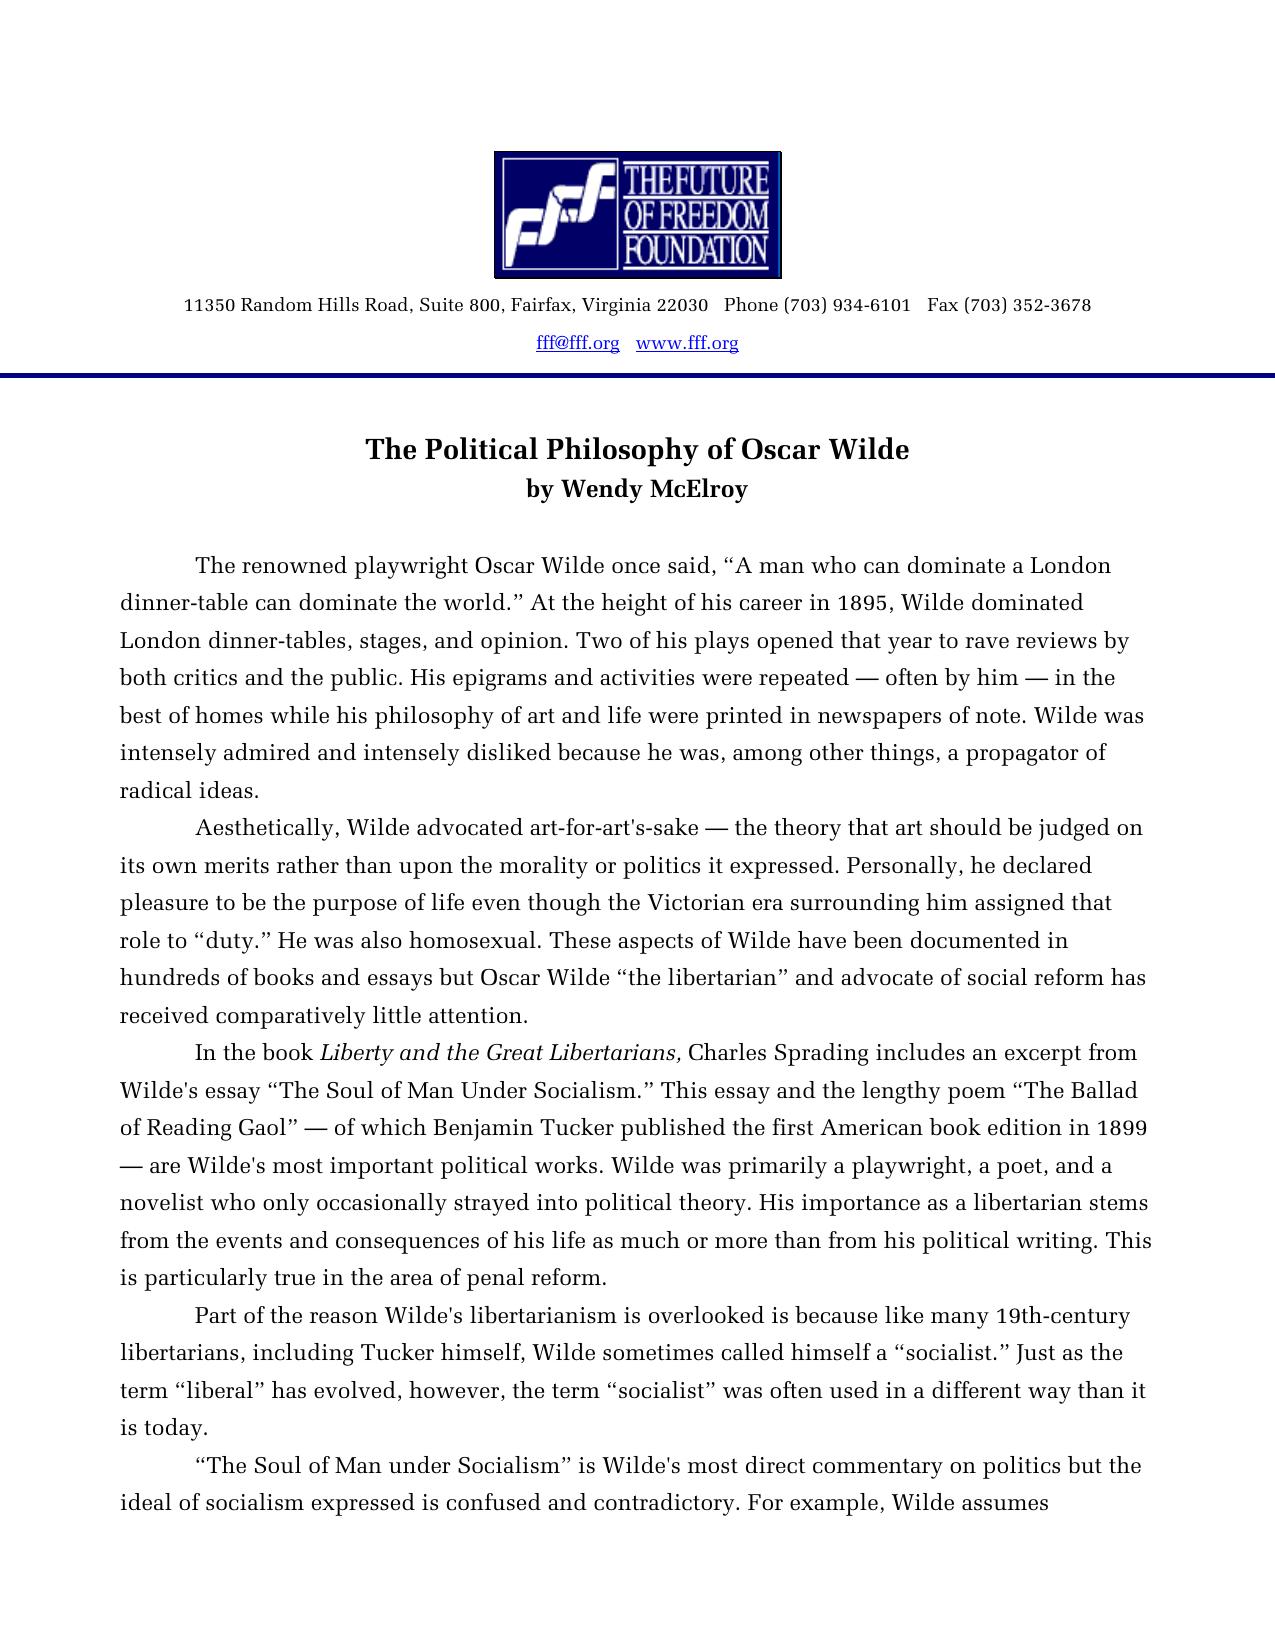 The Political Philosophy of Oscar Wilde - Essay